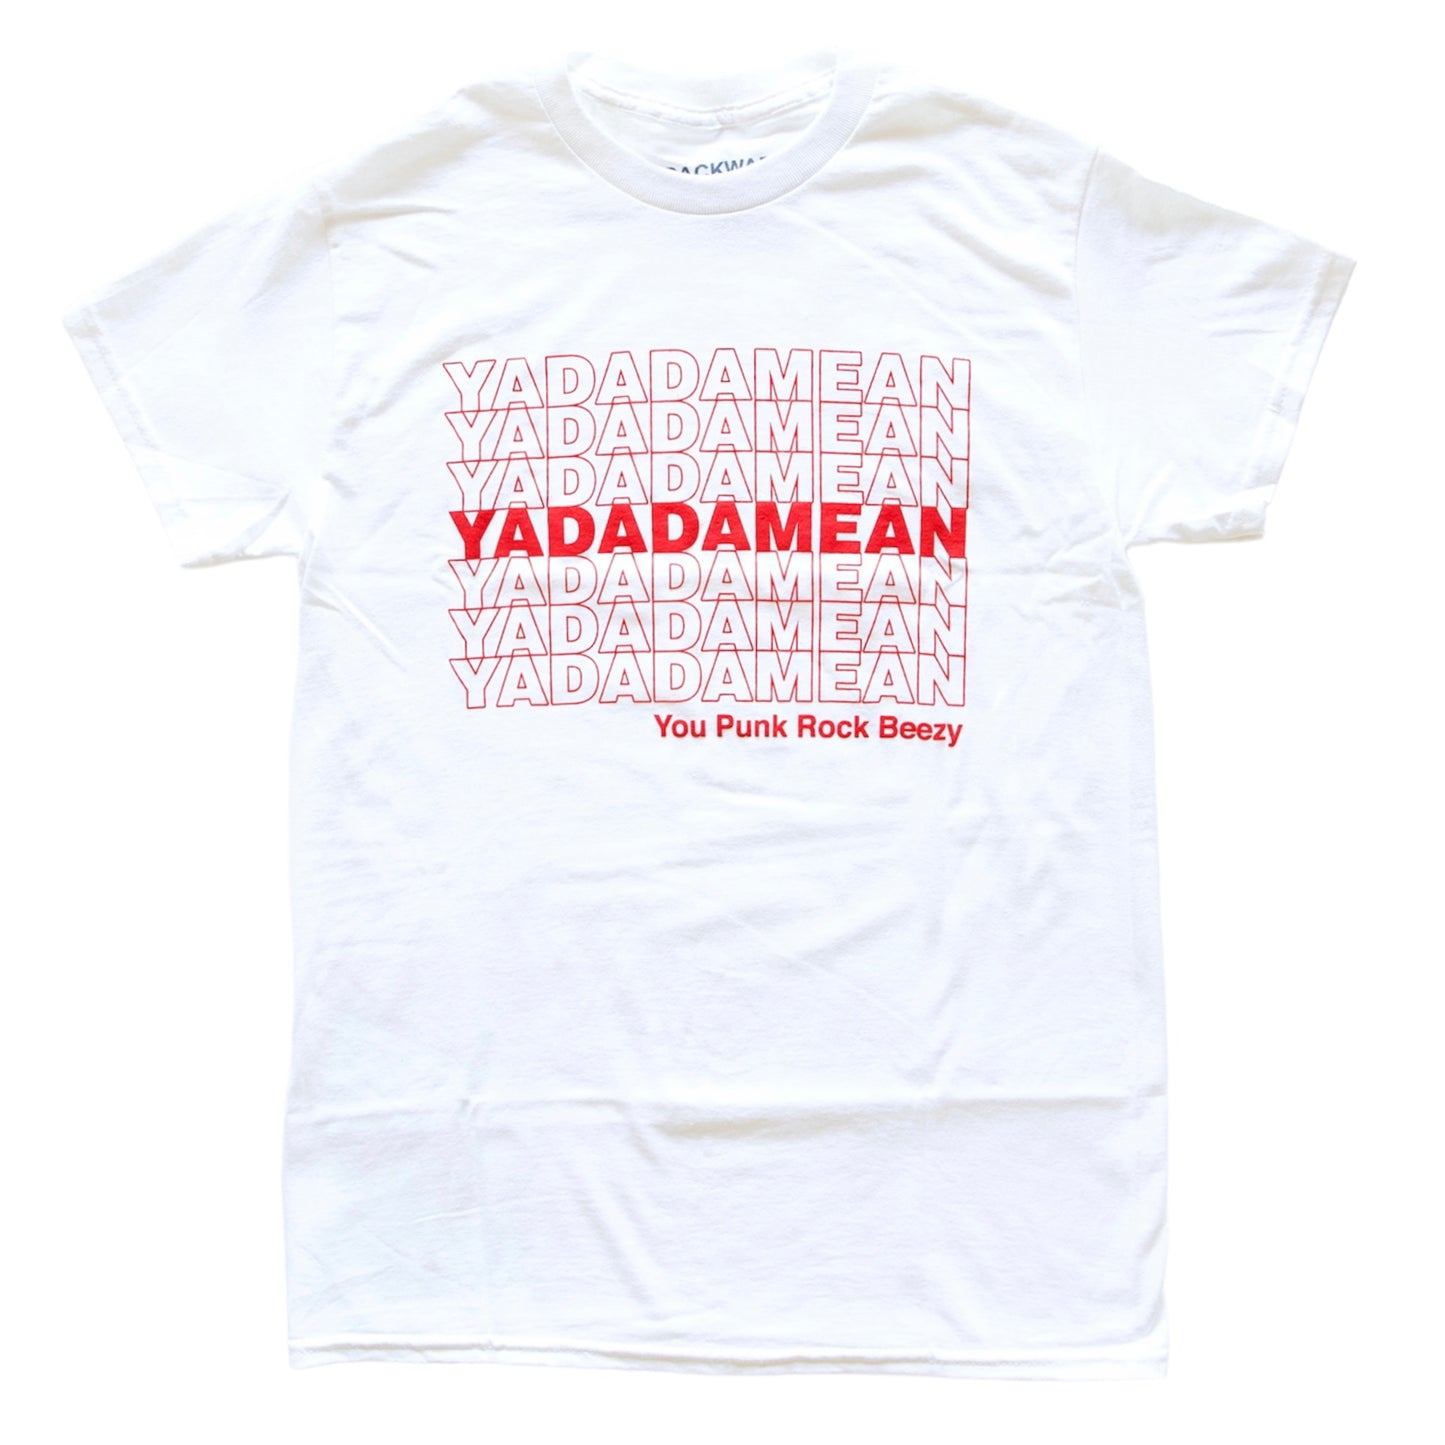 White “Yadadamean You Punk Rocky Beezy” T-Shirt